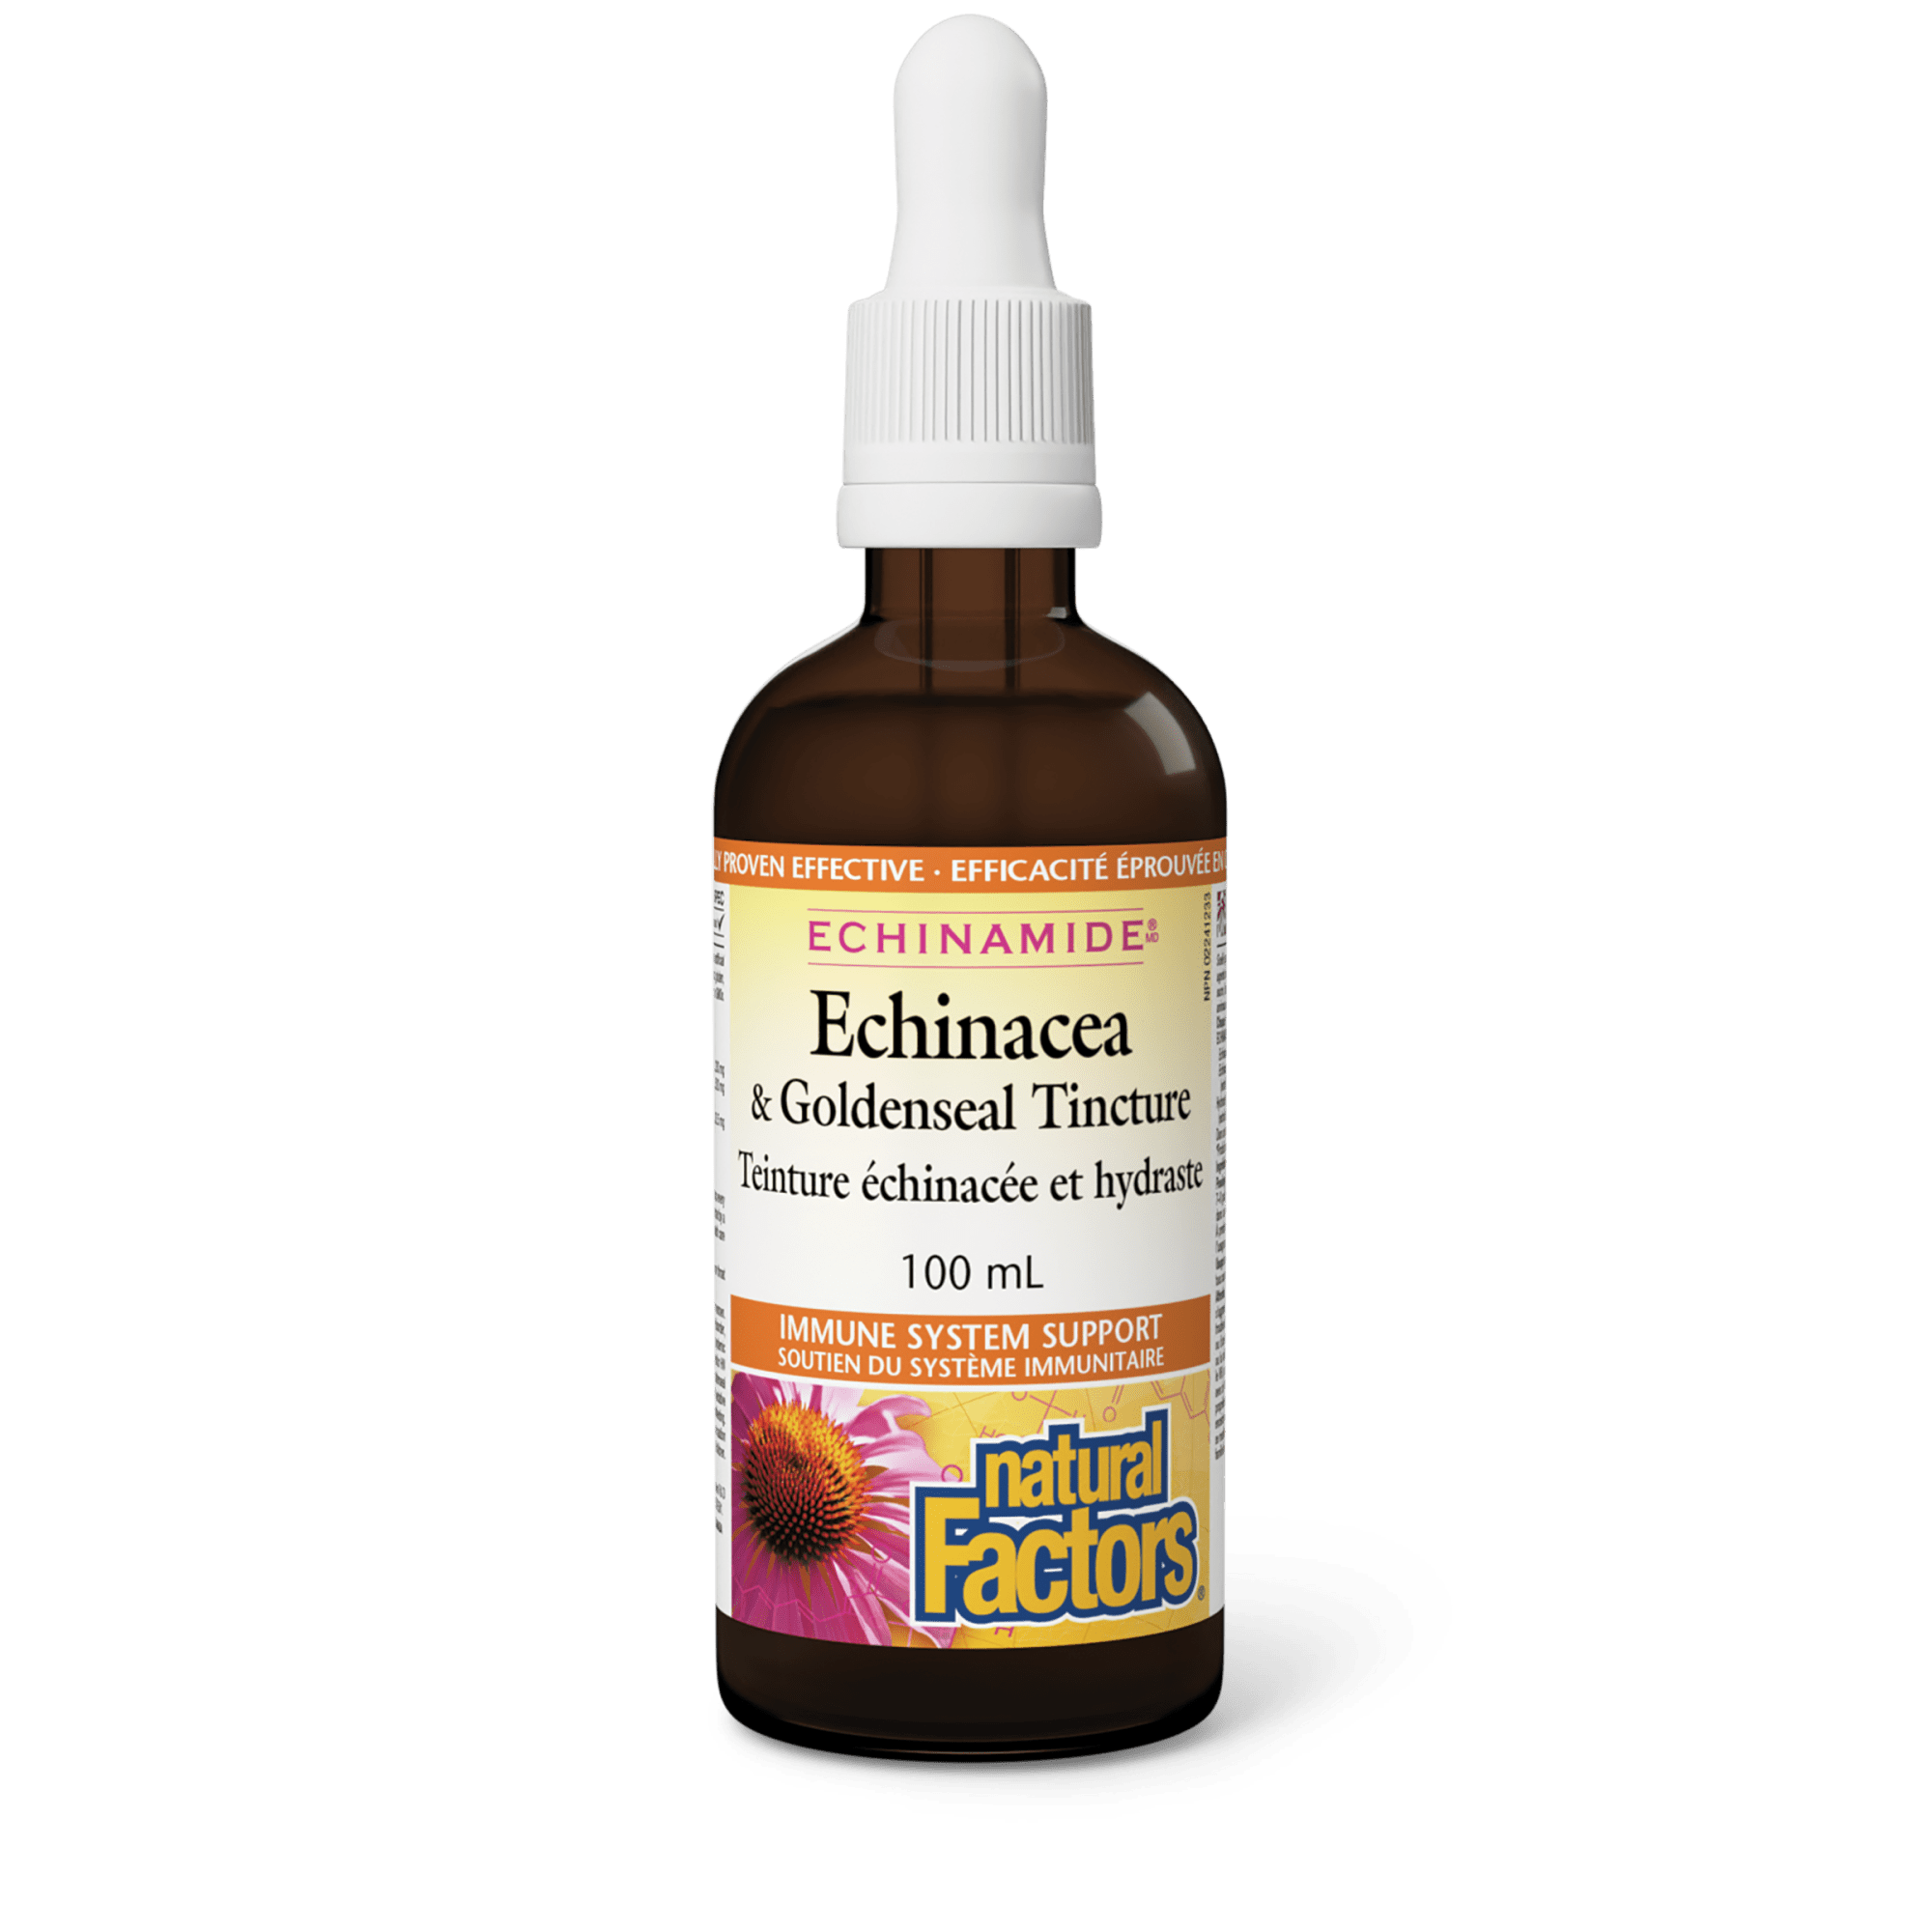 Natural Factors ECHINAMIDE Echinacea & Goldenseal Tincture 100ml